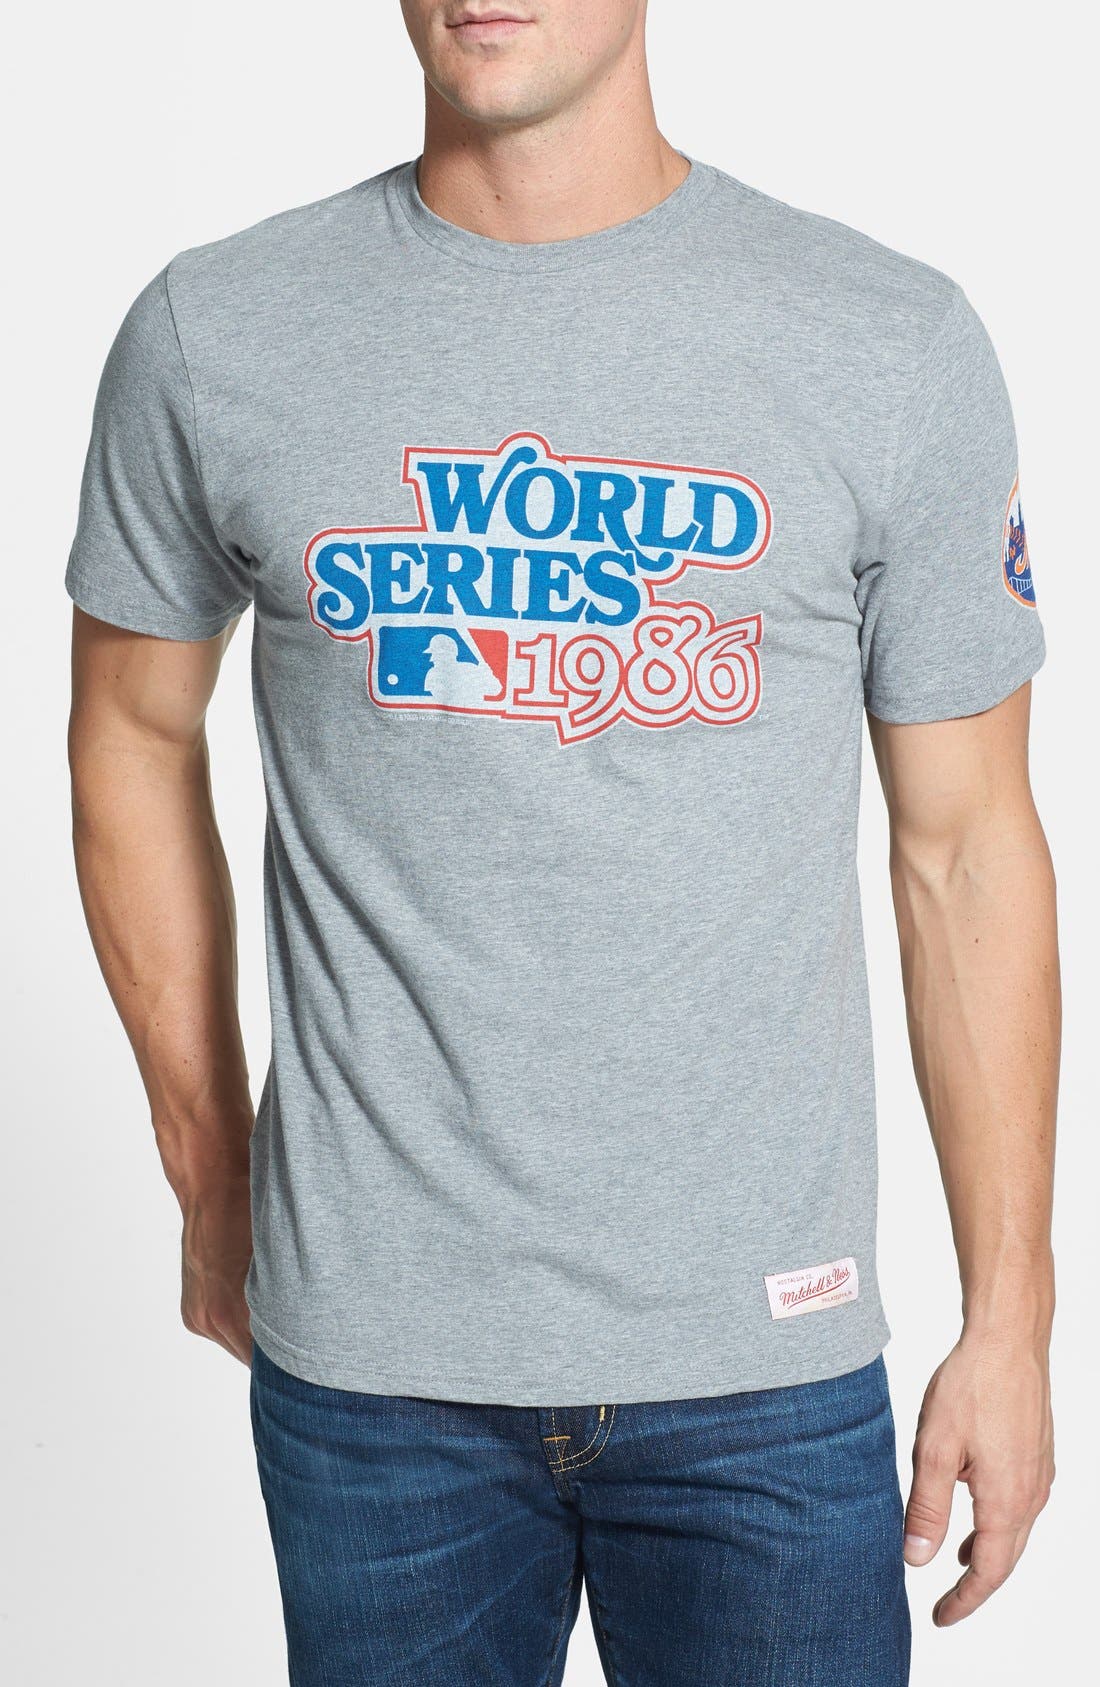 1986 mets world series shirt